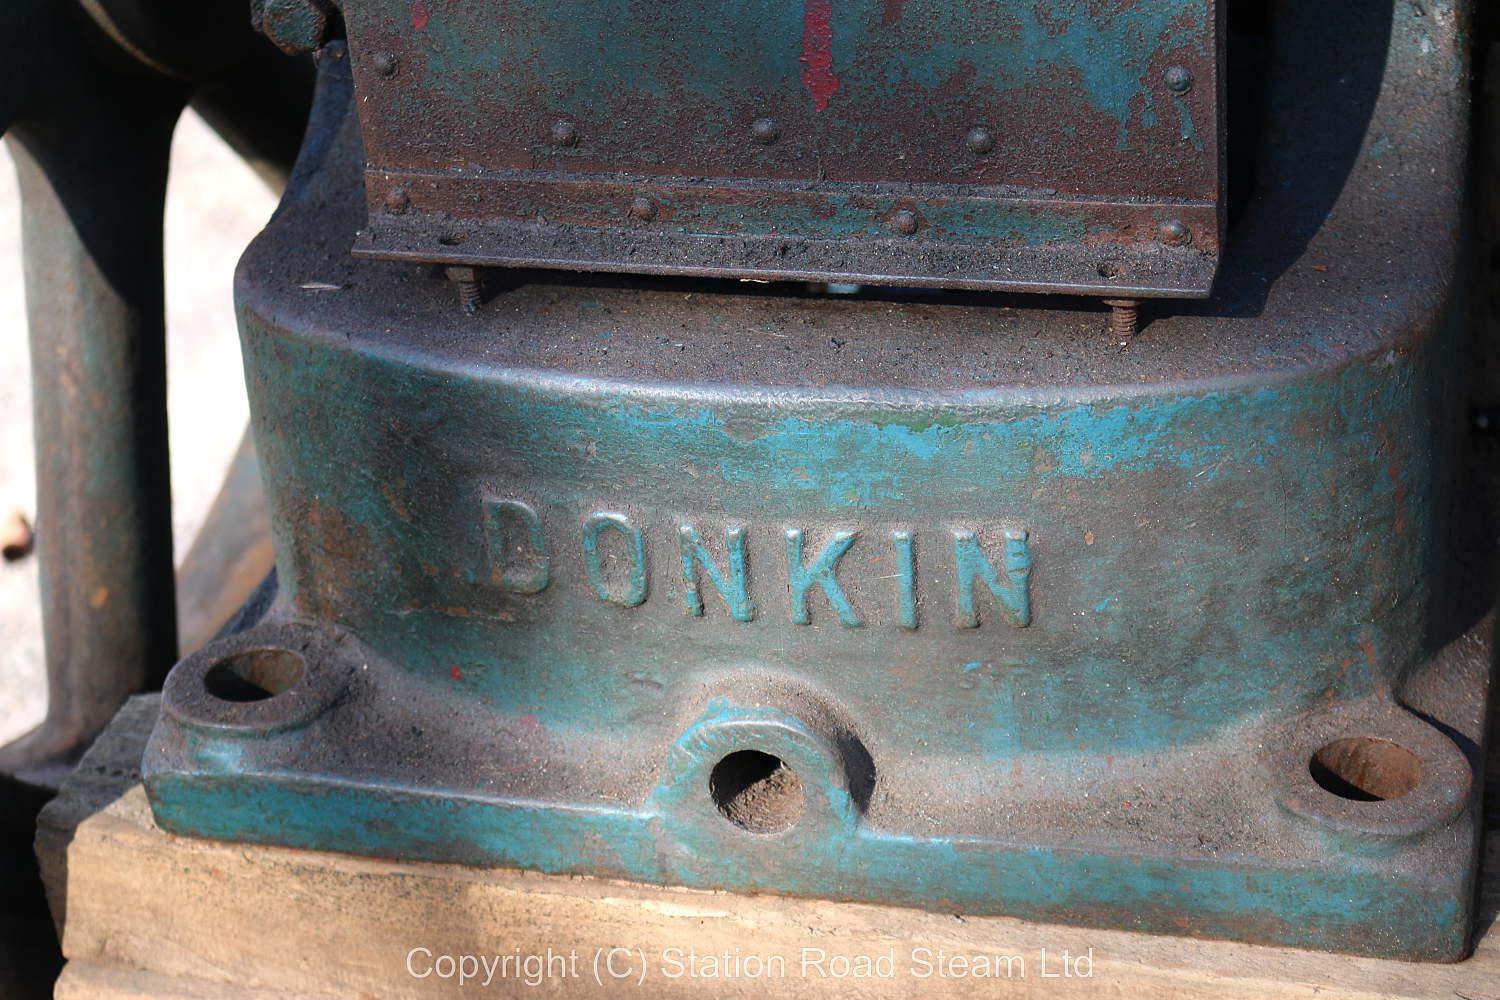 Bryan Donkin horizontal engine